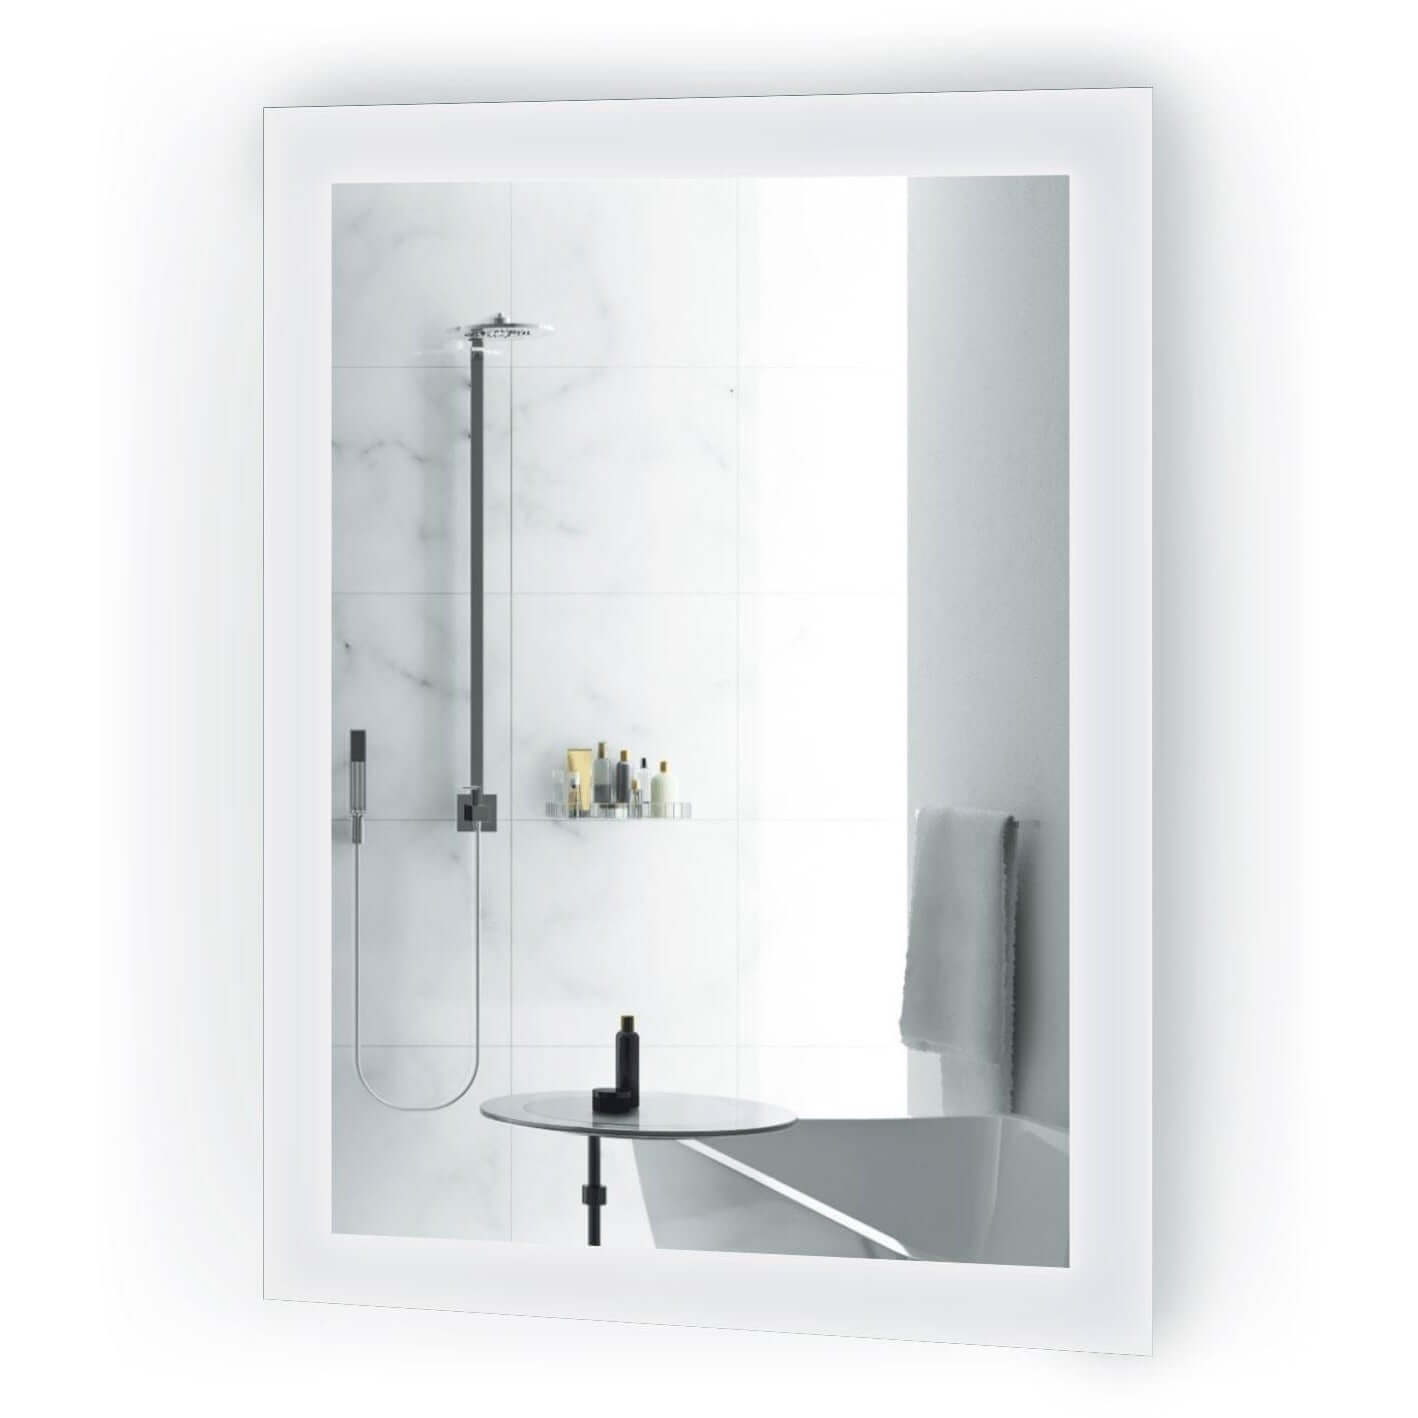 Sleek Krugg Bijou 15 X 20 LED bathroom mirror with dimming functionality